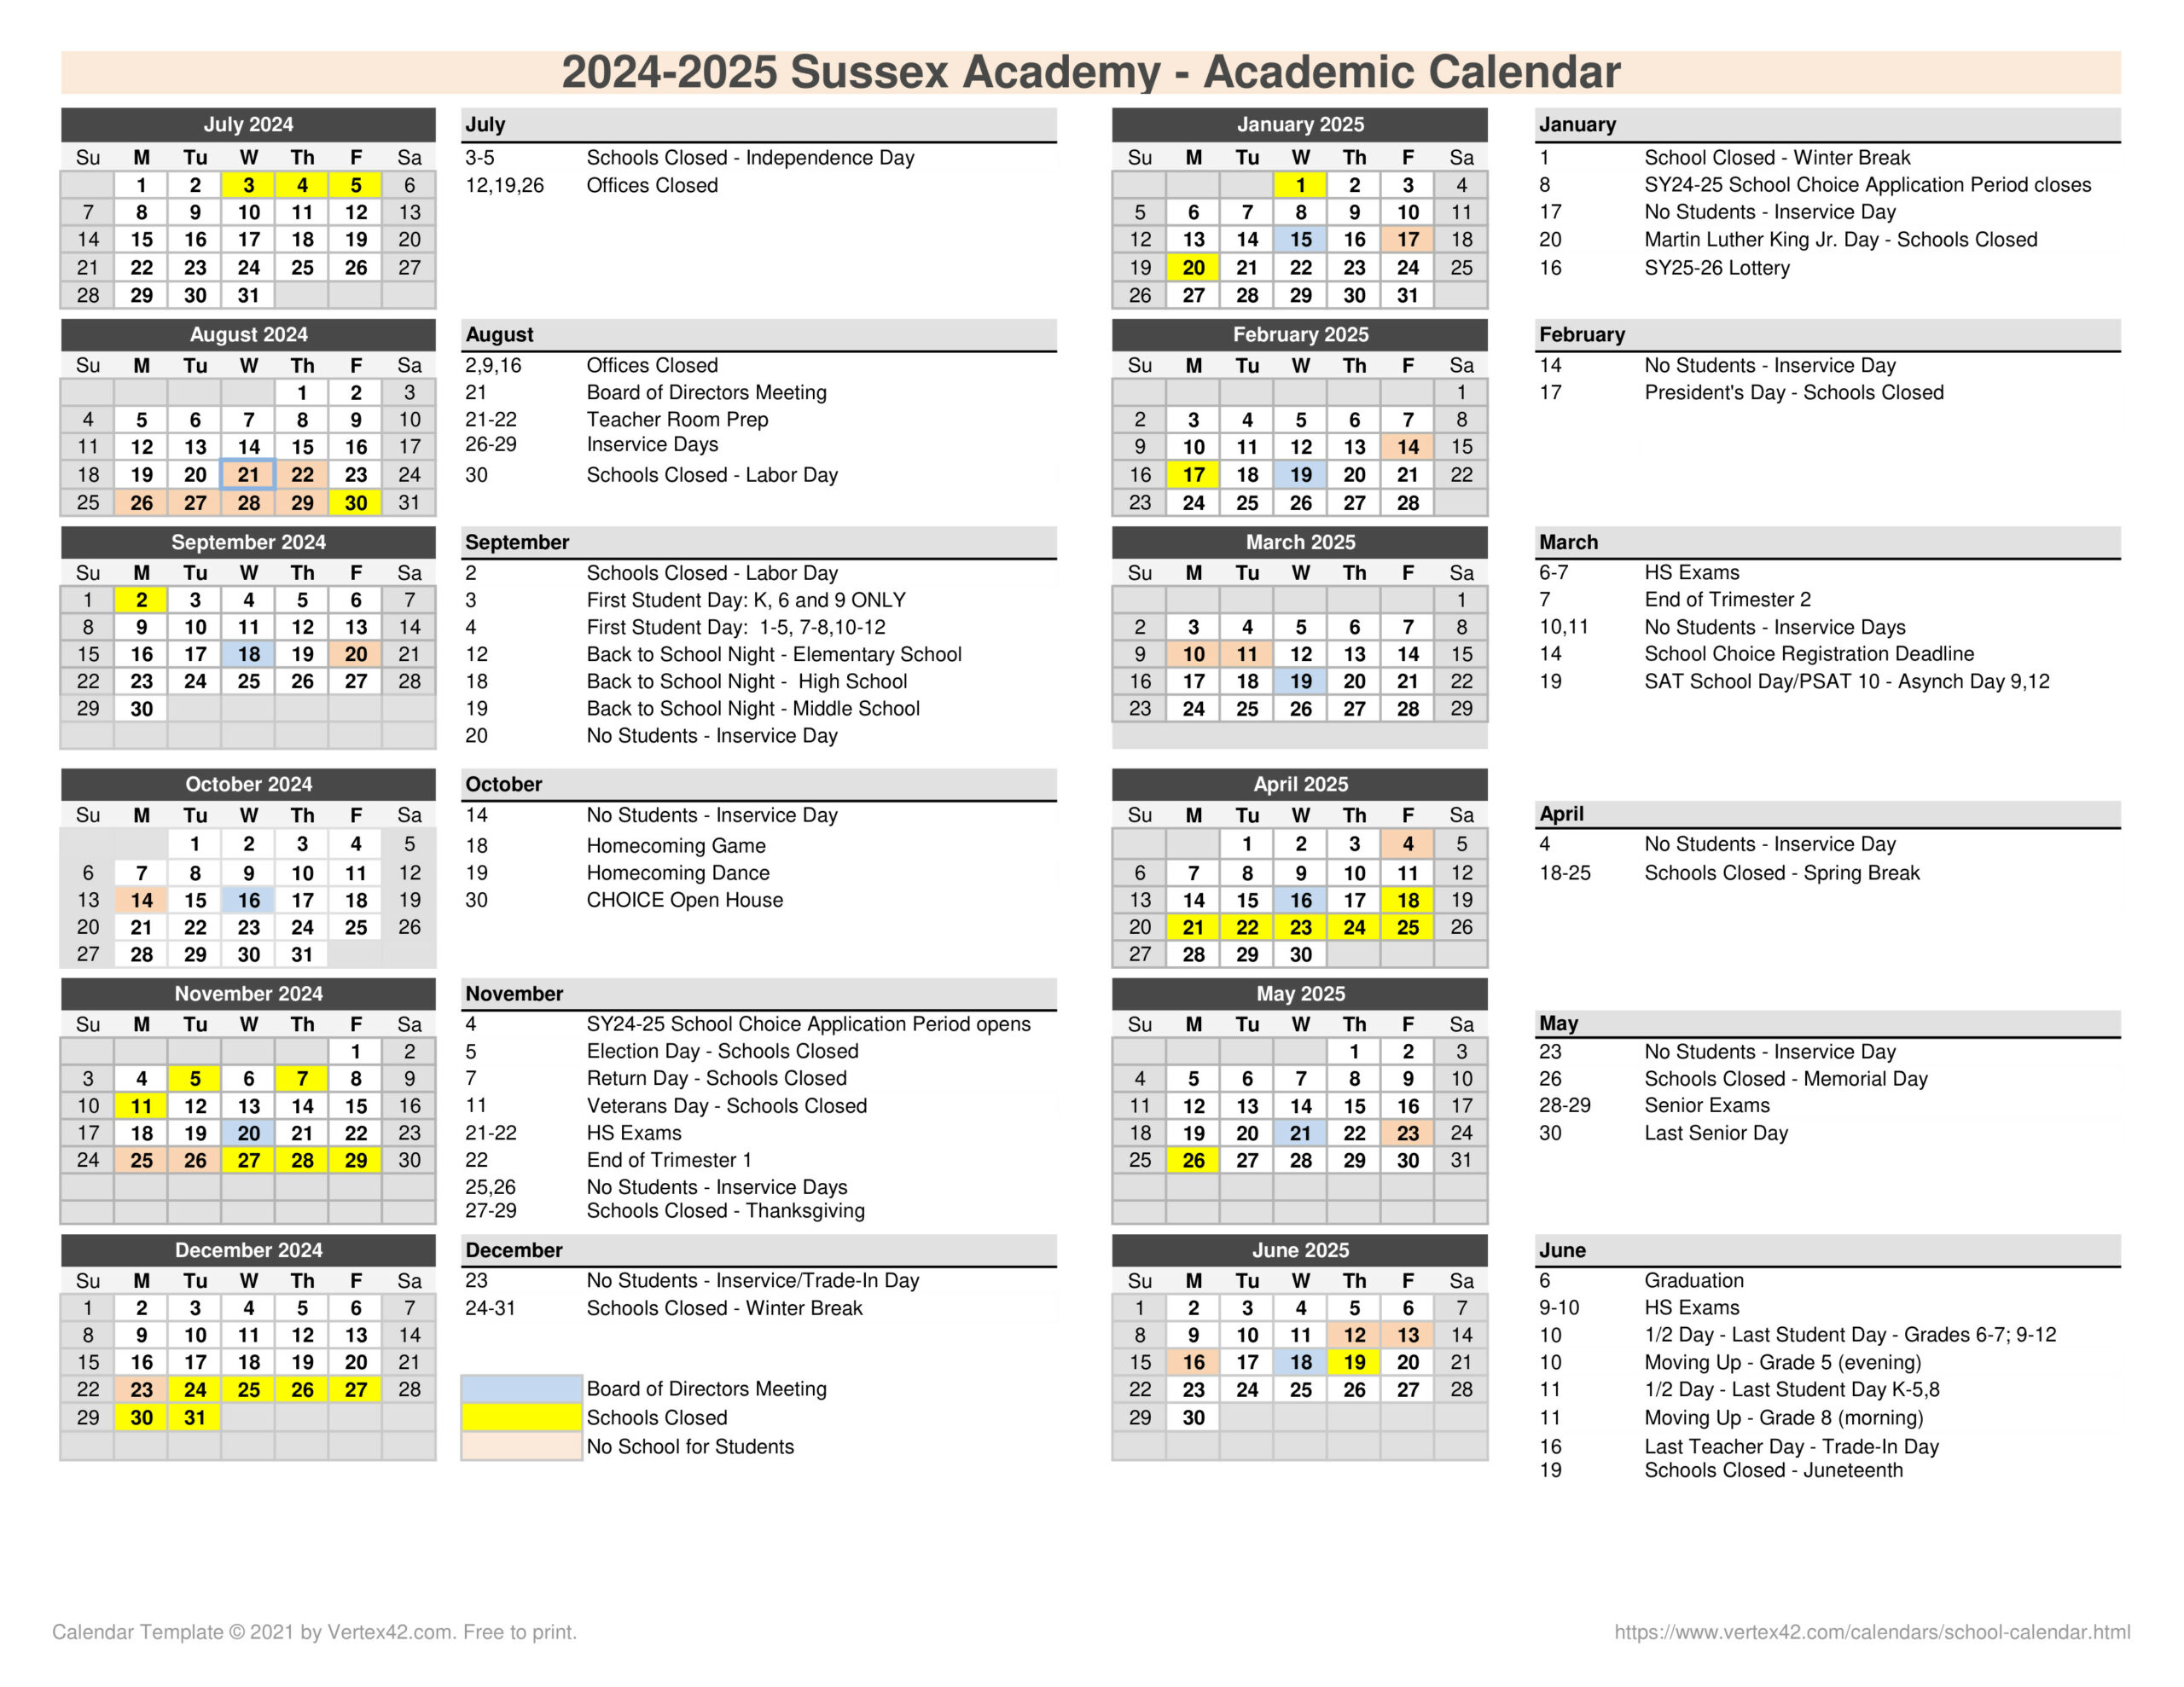 2024-25 SA Academic Calendar